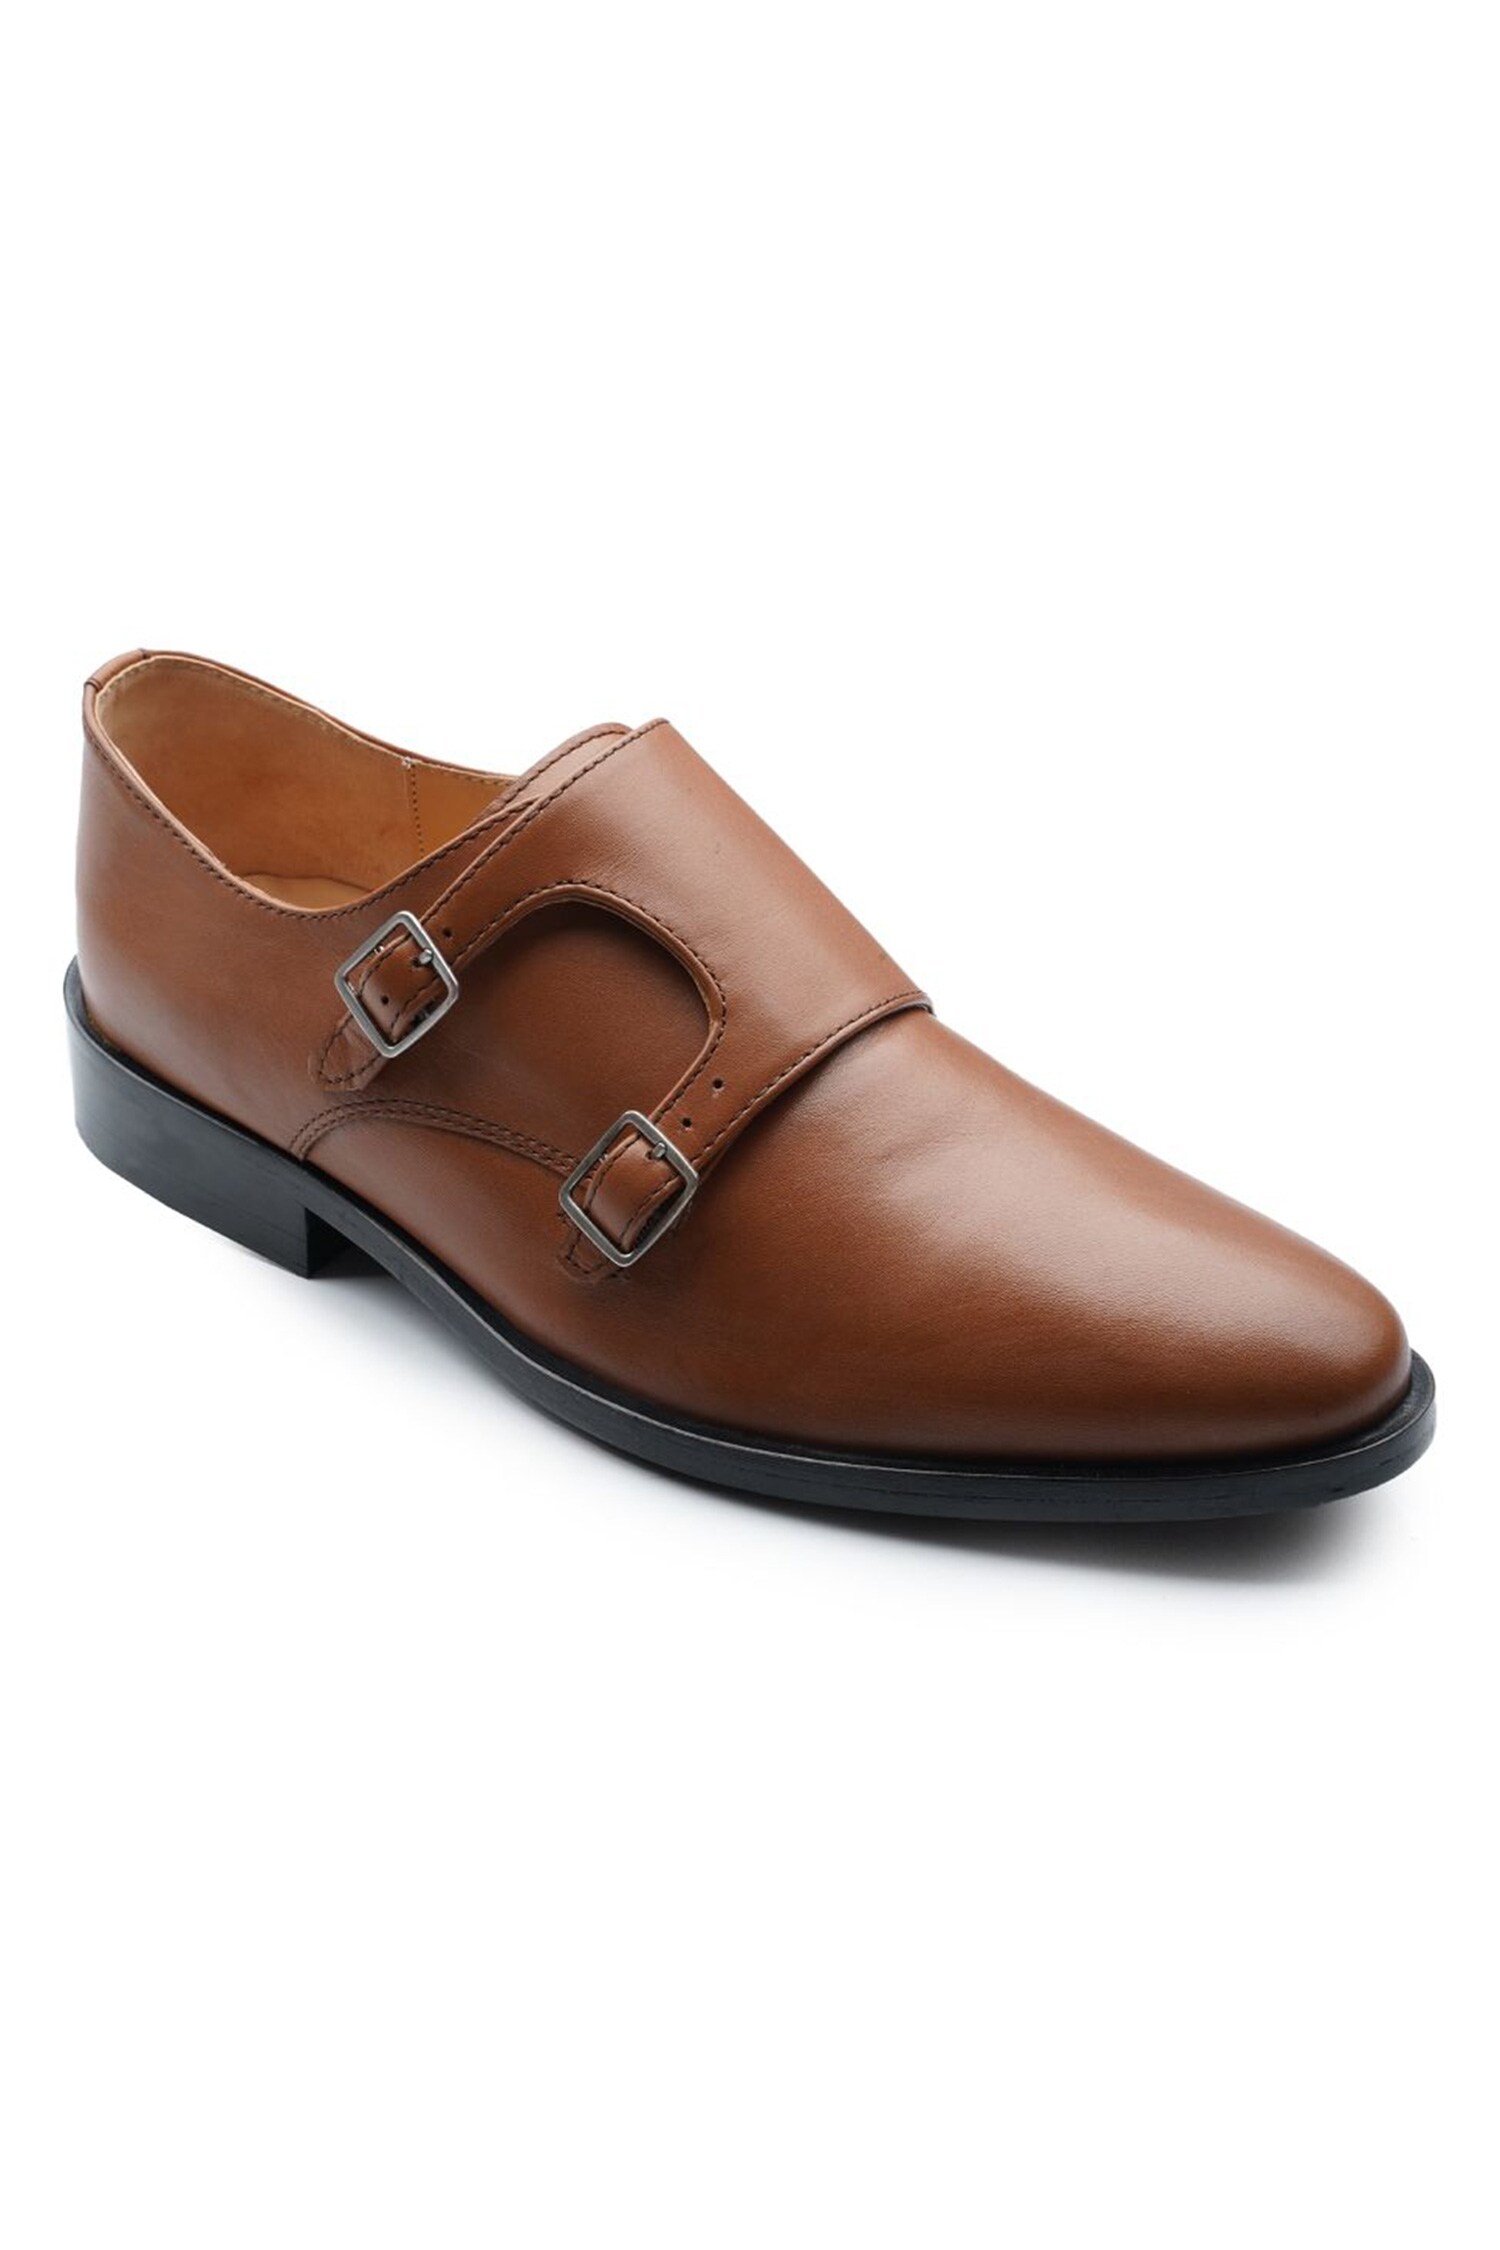 Buy Rapawalk Brown Italian Soft Leather Double Strap Monk Shoes Online ...